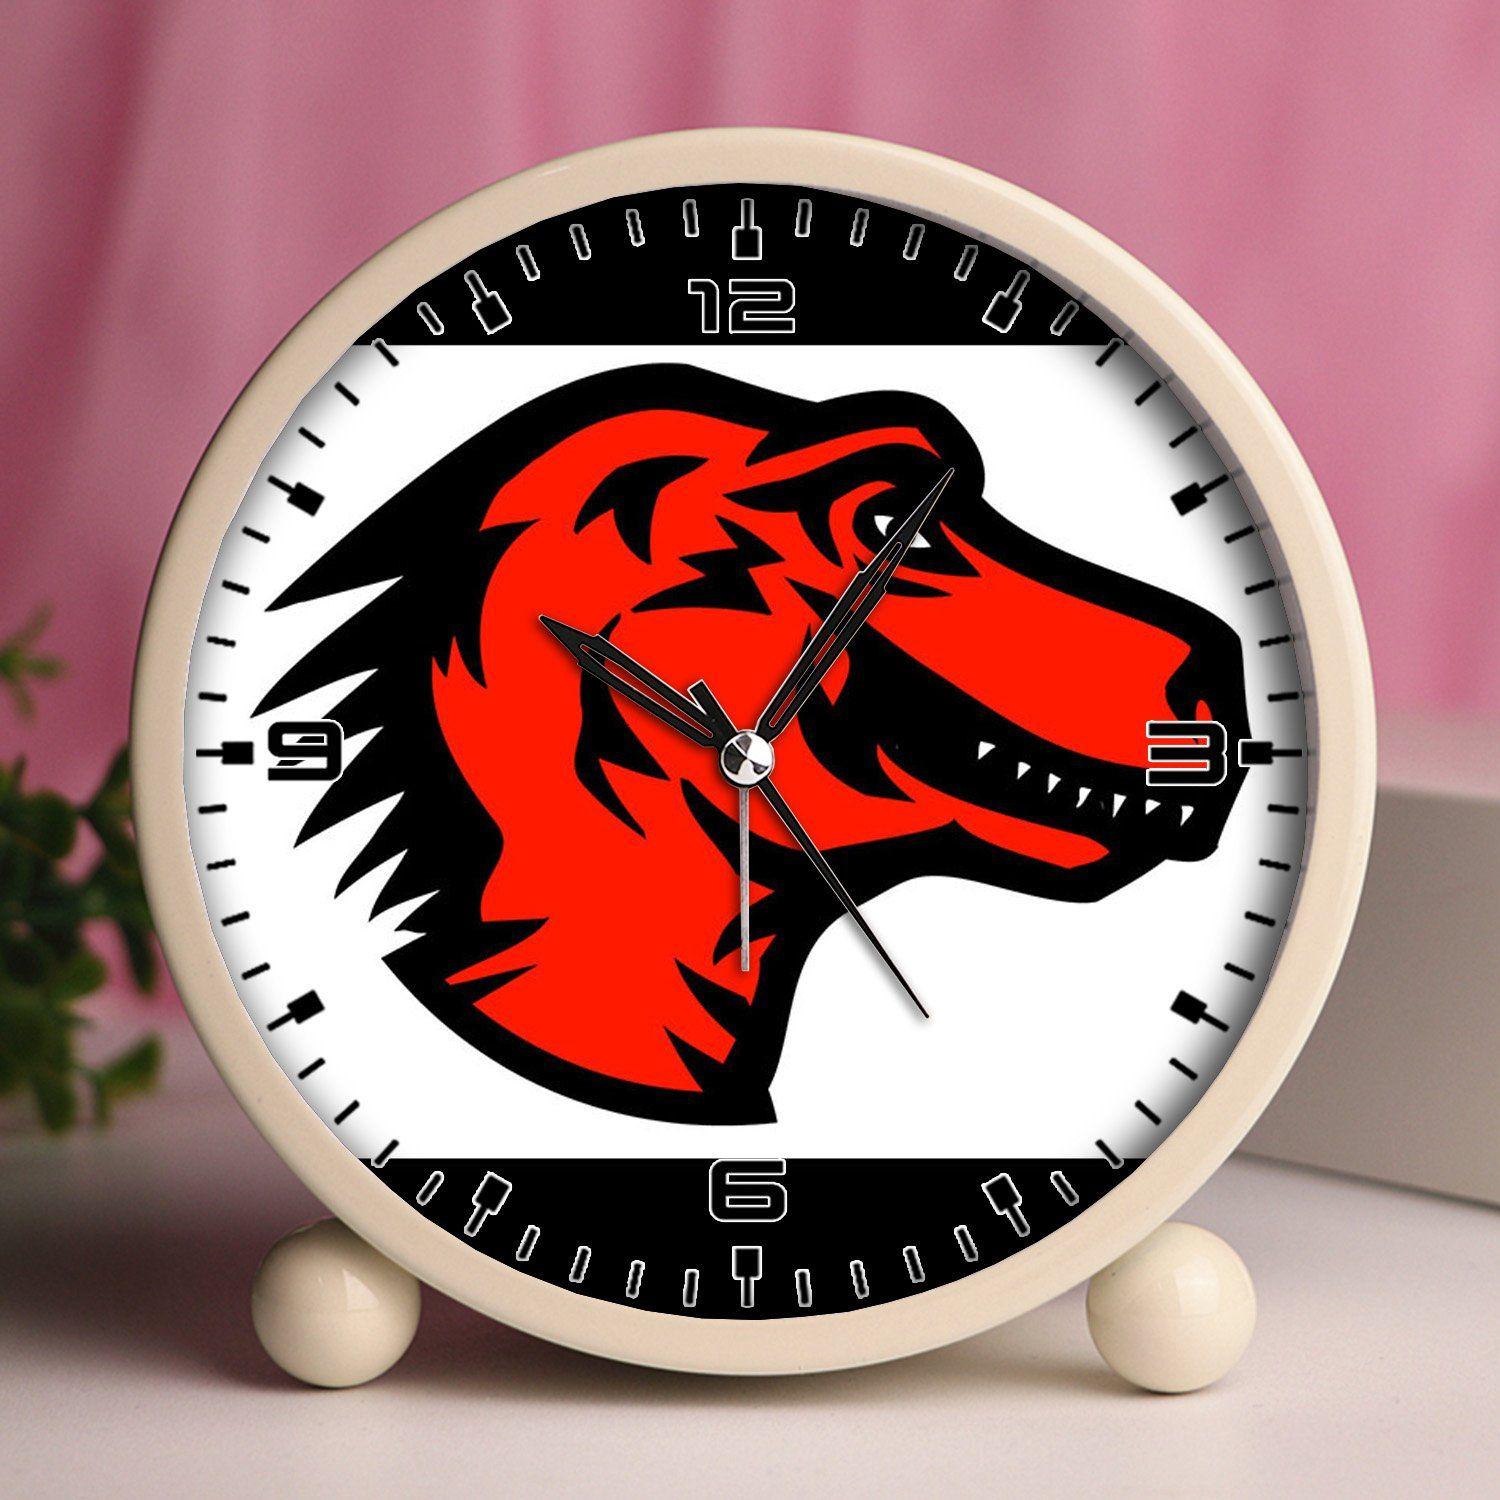 Red Dinosaur Head Logo - Amazon.com: Alarm Clock, Bedroom Tabletop Retro Portable Clocks with ...